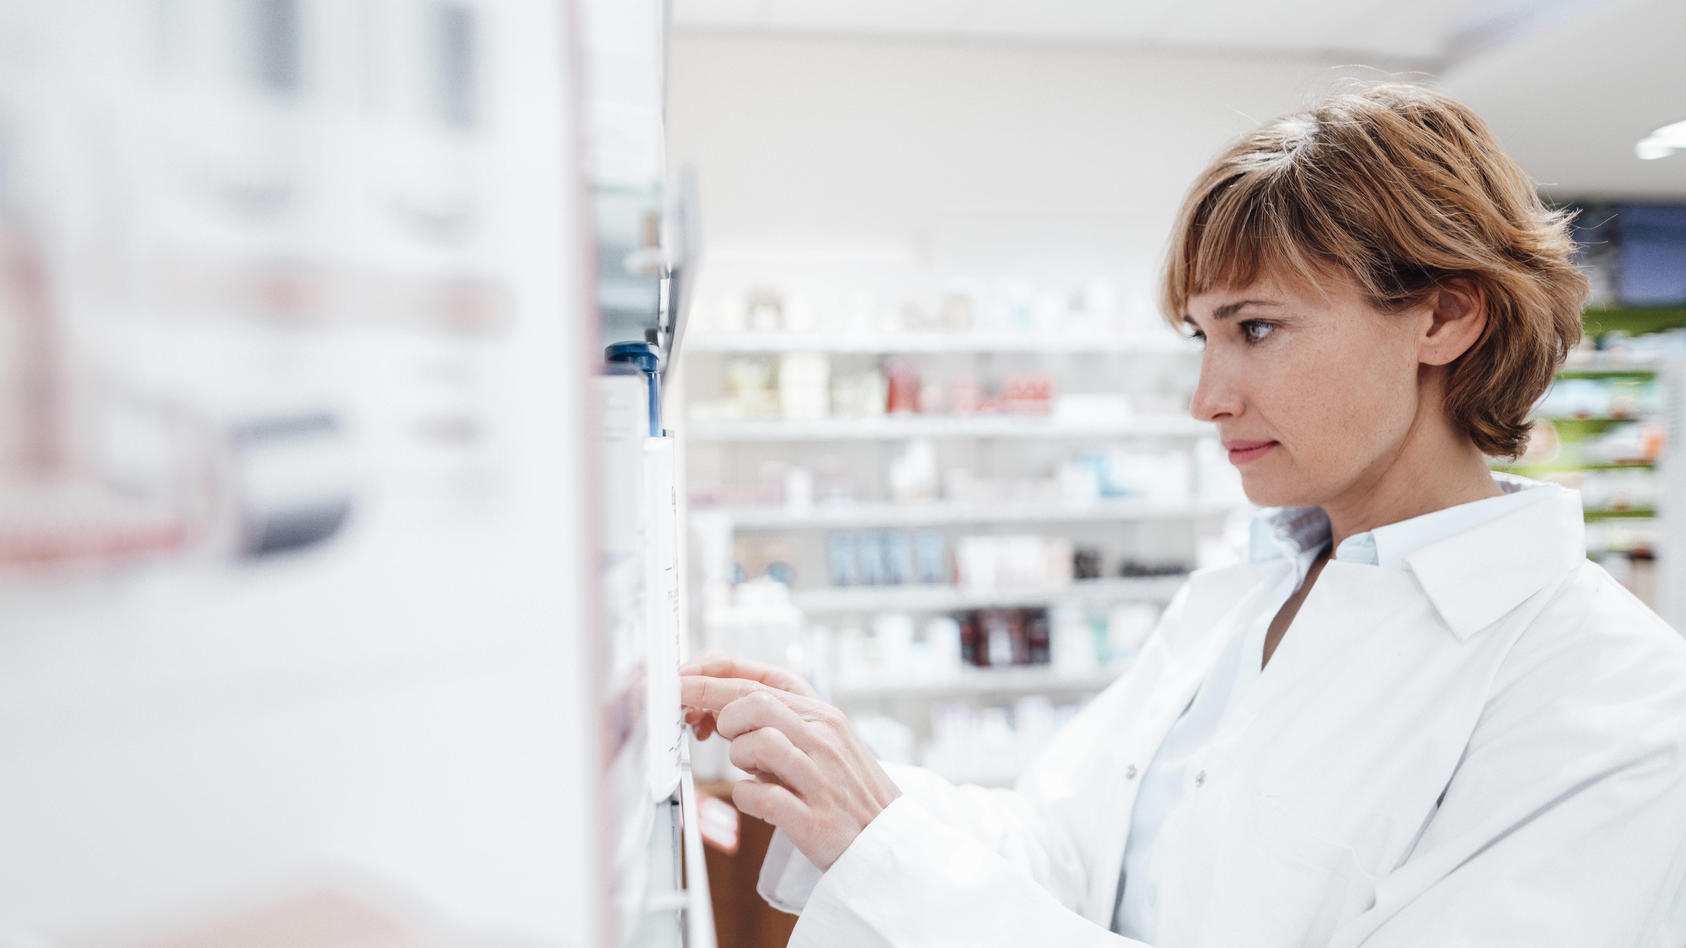  Female pharmacist searching medicine at pharmacy model released Symbolfoto property released JOSEF05446